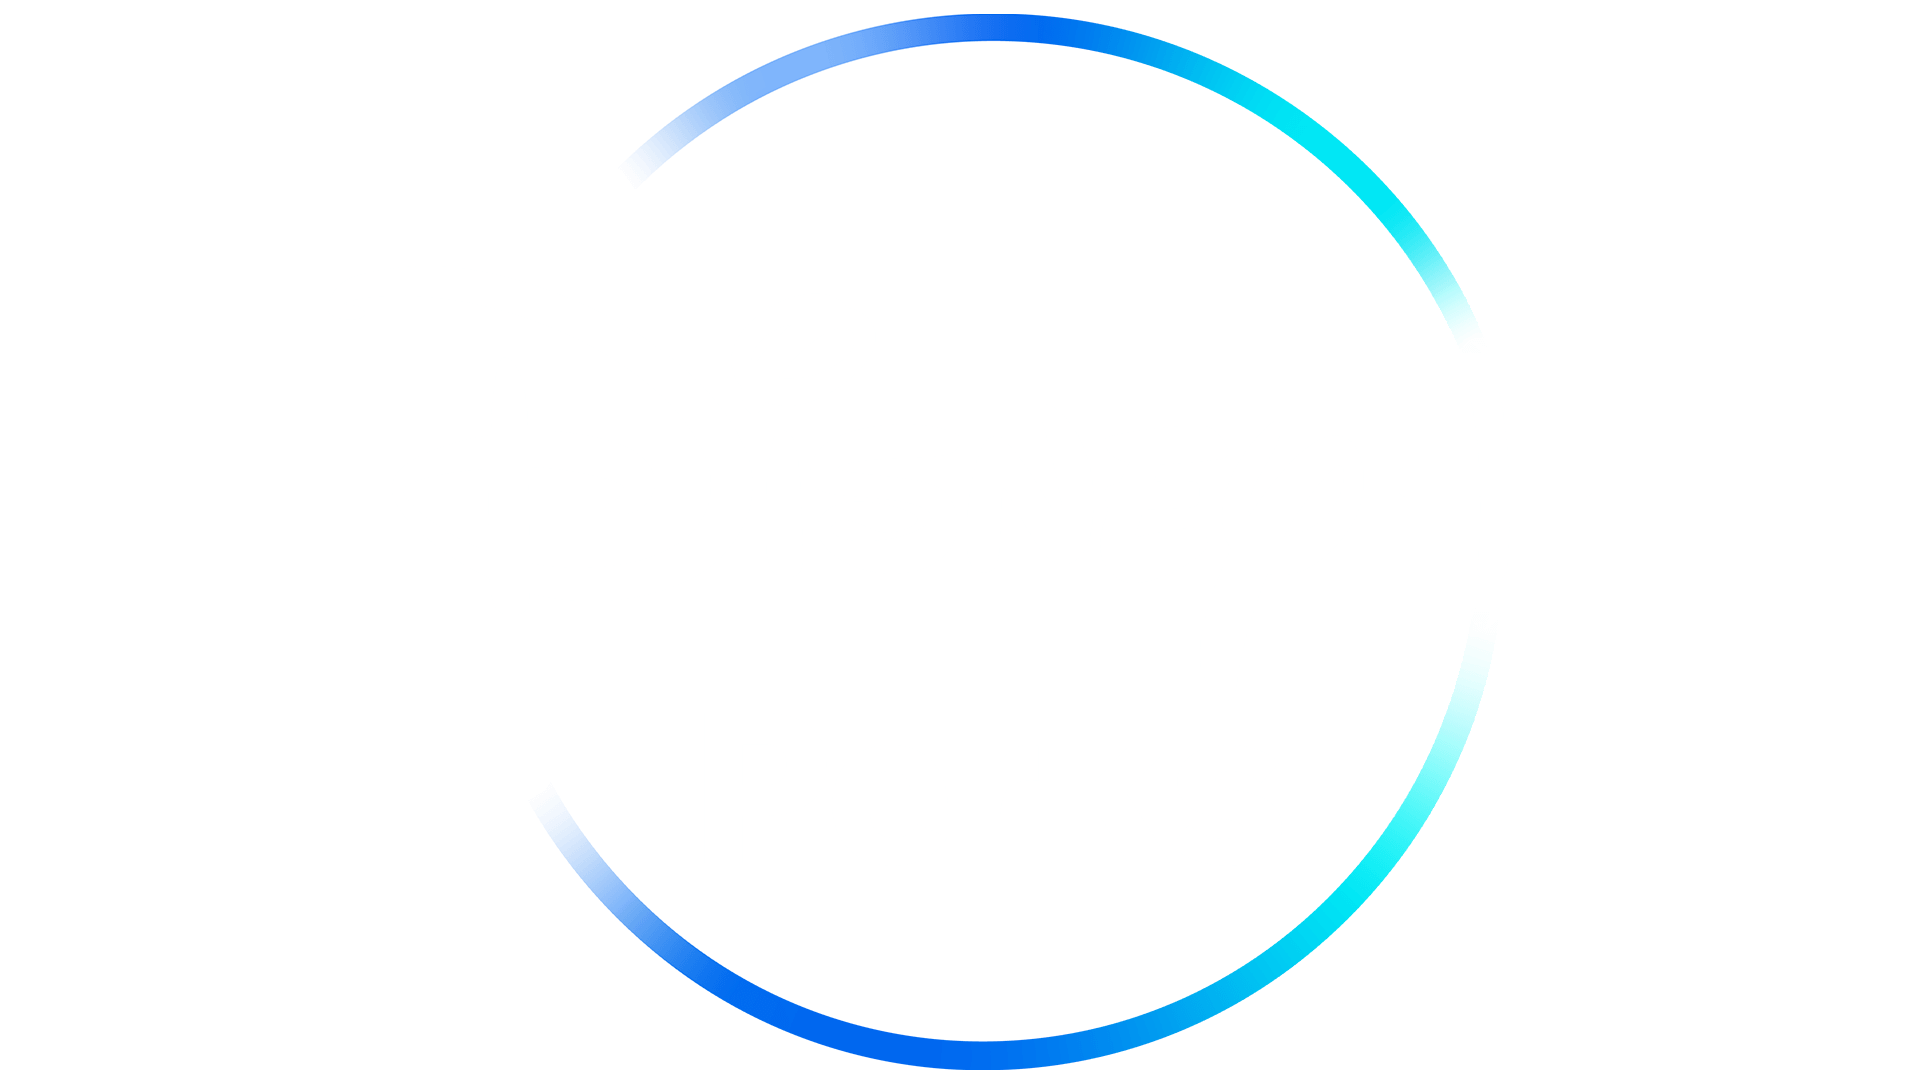 Disney + Perks Logo